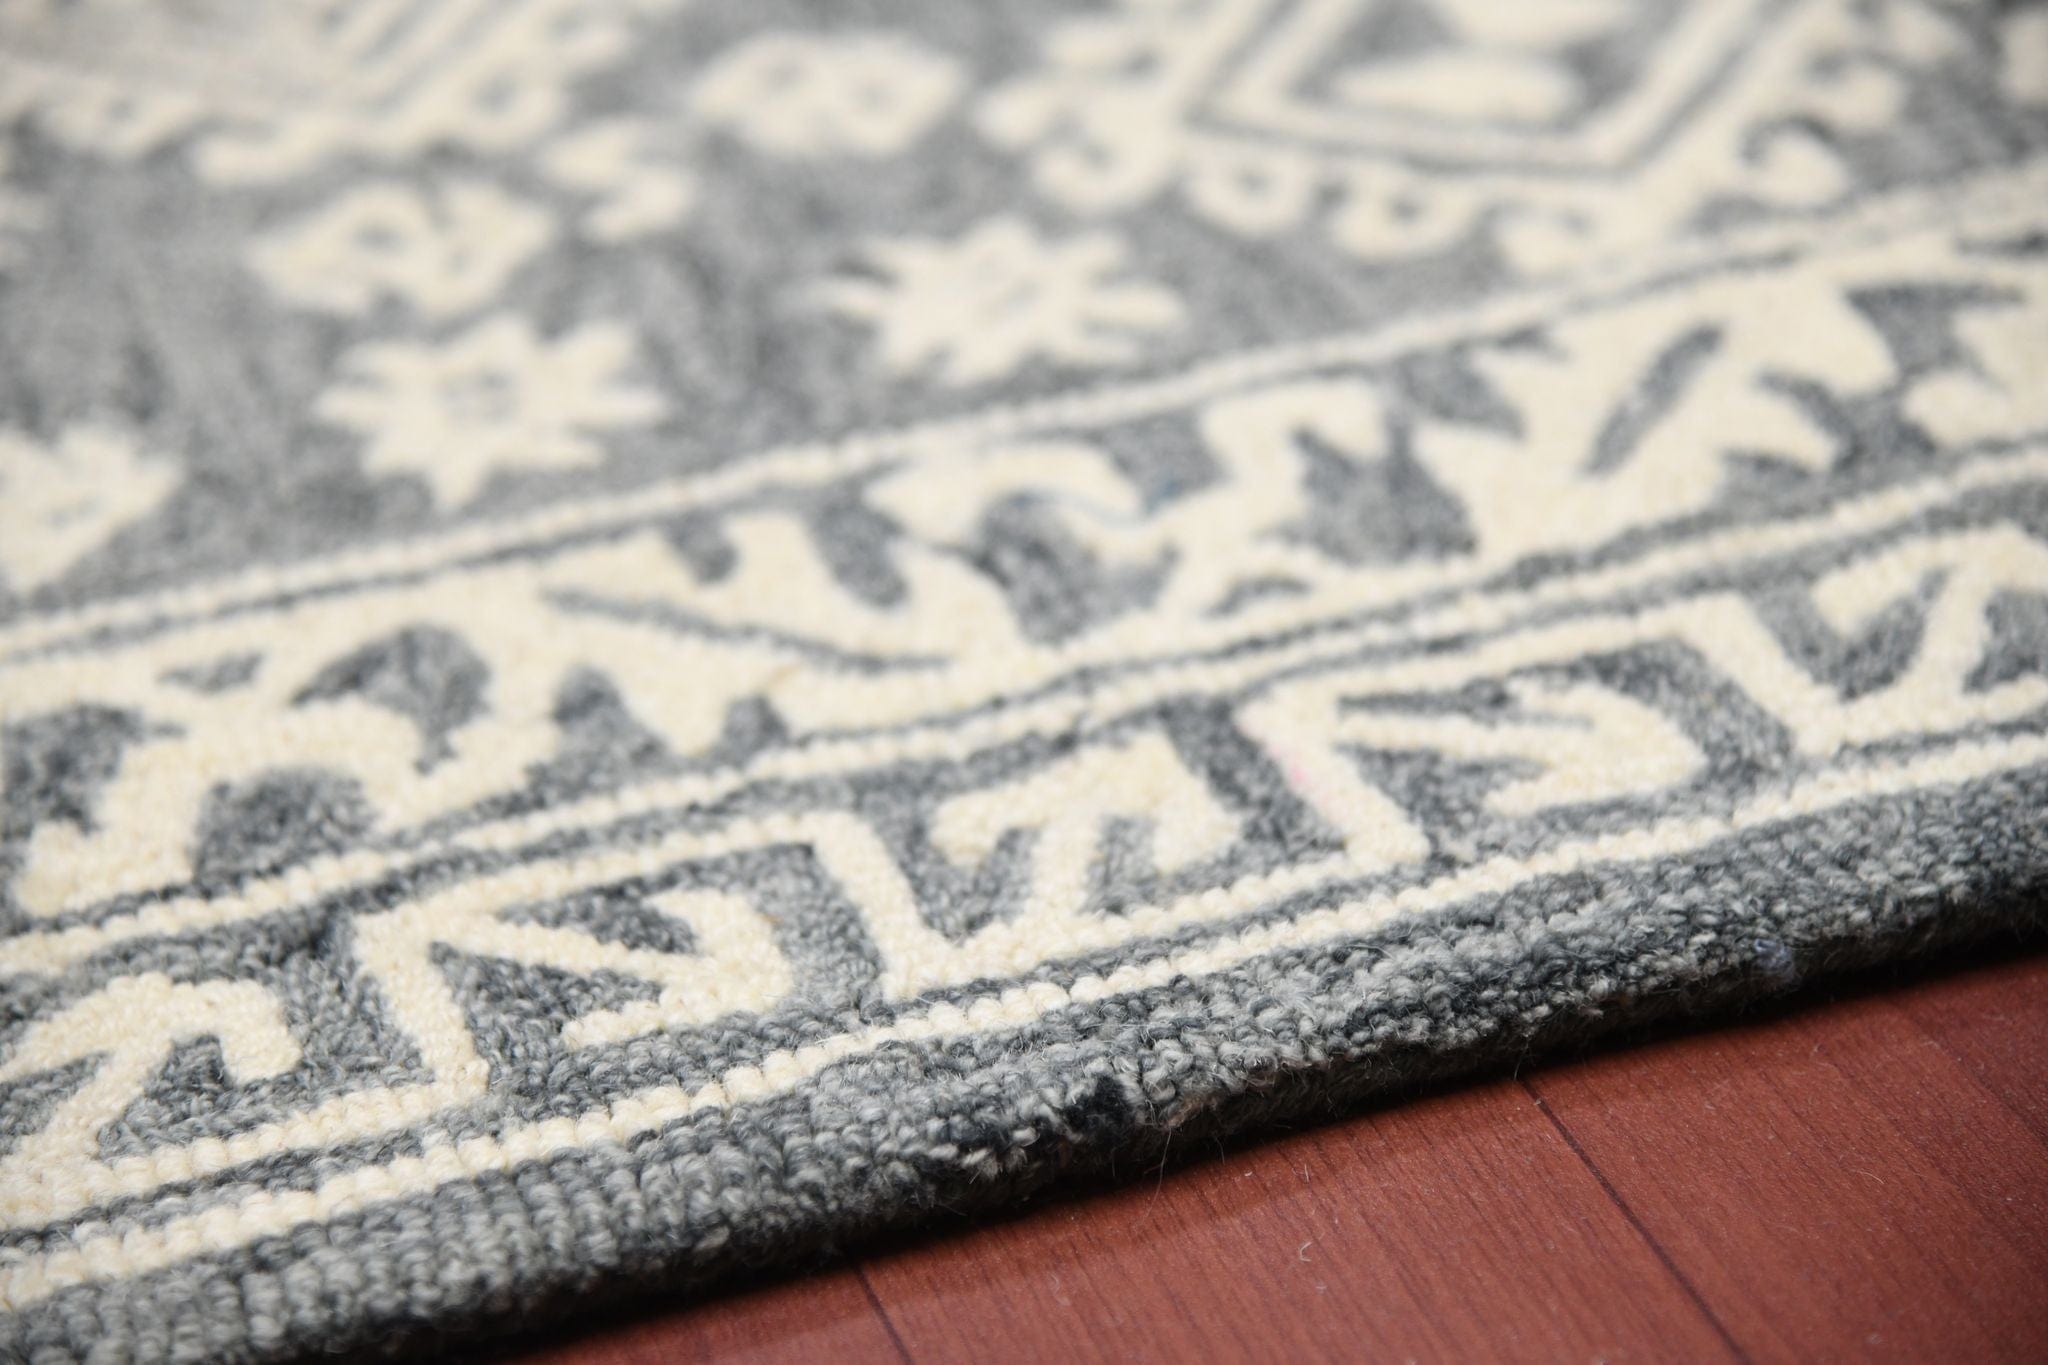 Slate Gray Wool Boston 4x6 Feet  Hand-Tufted Carpet - Rug